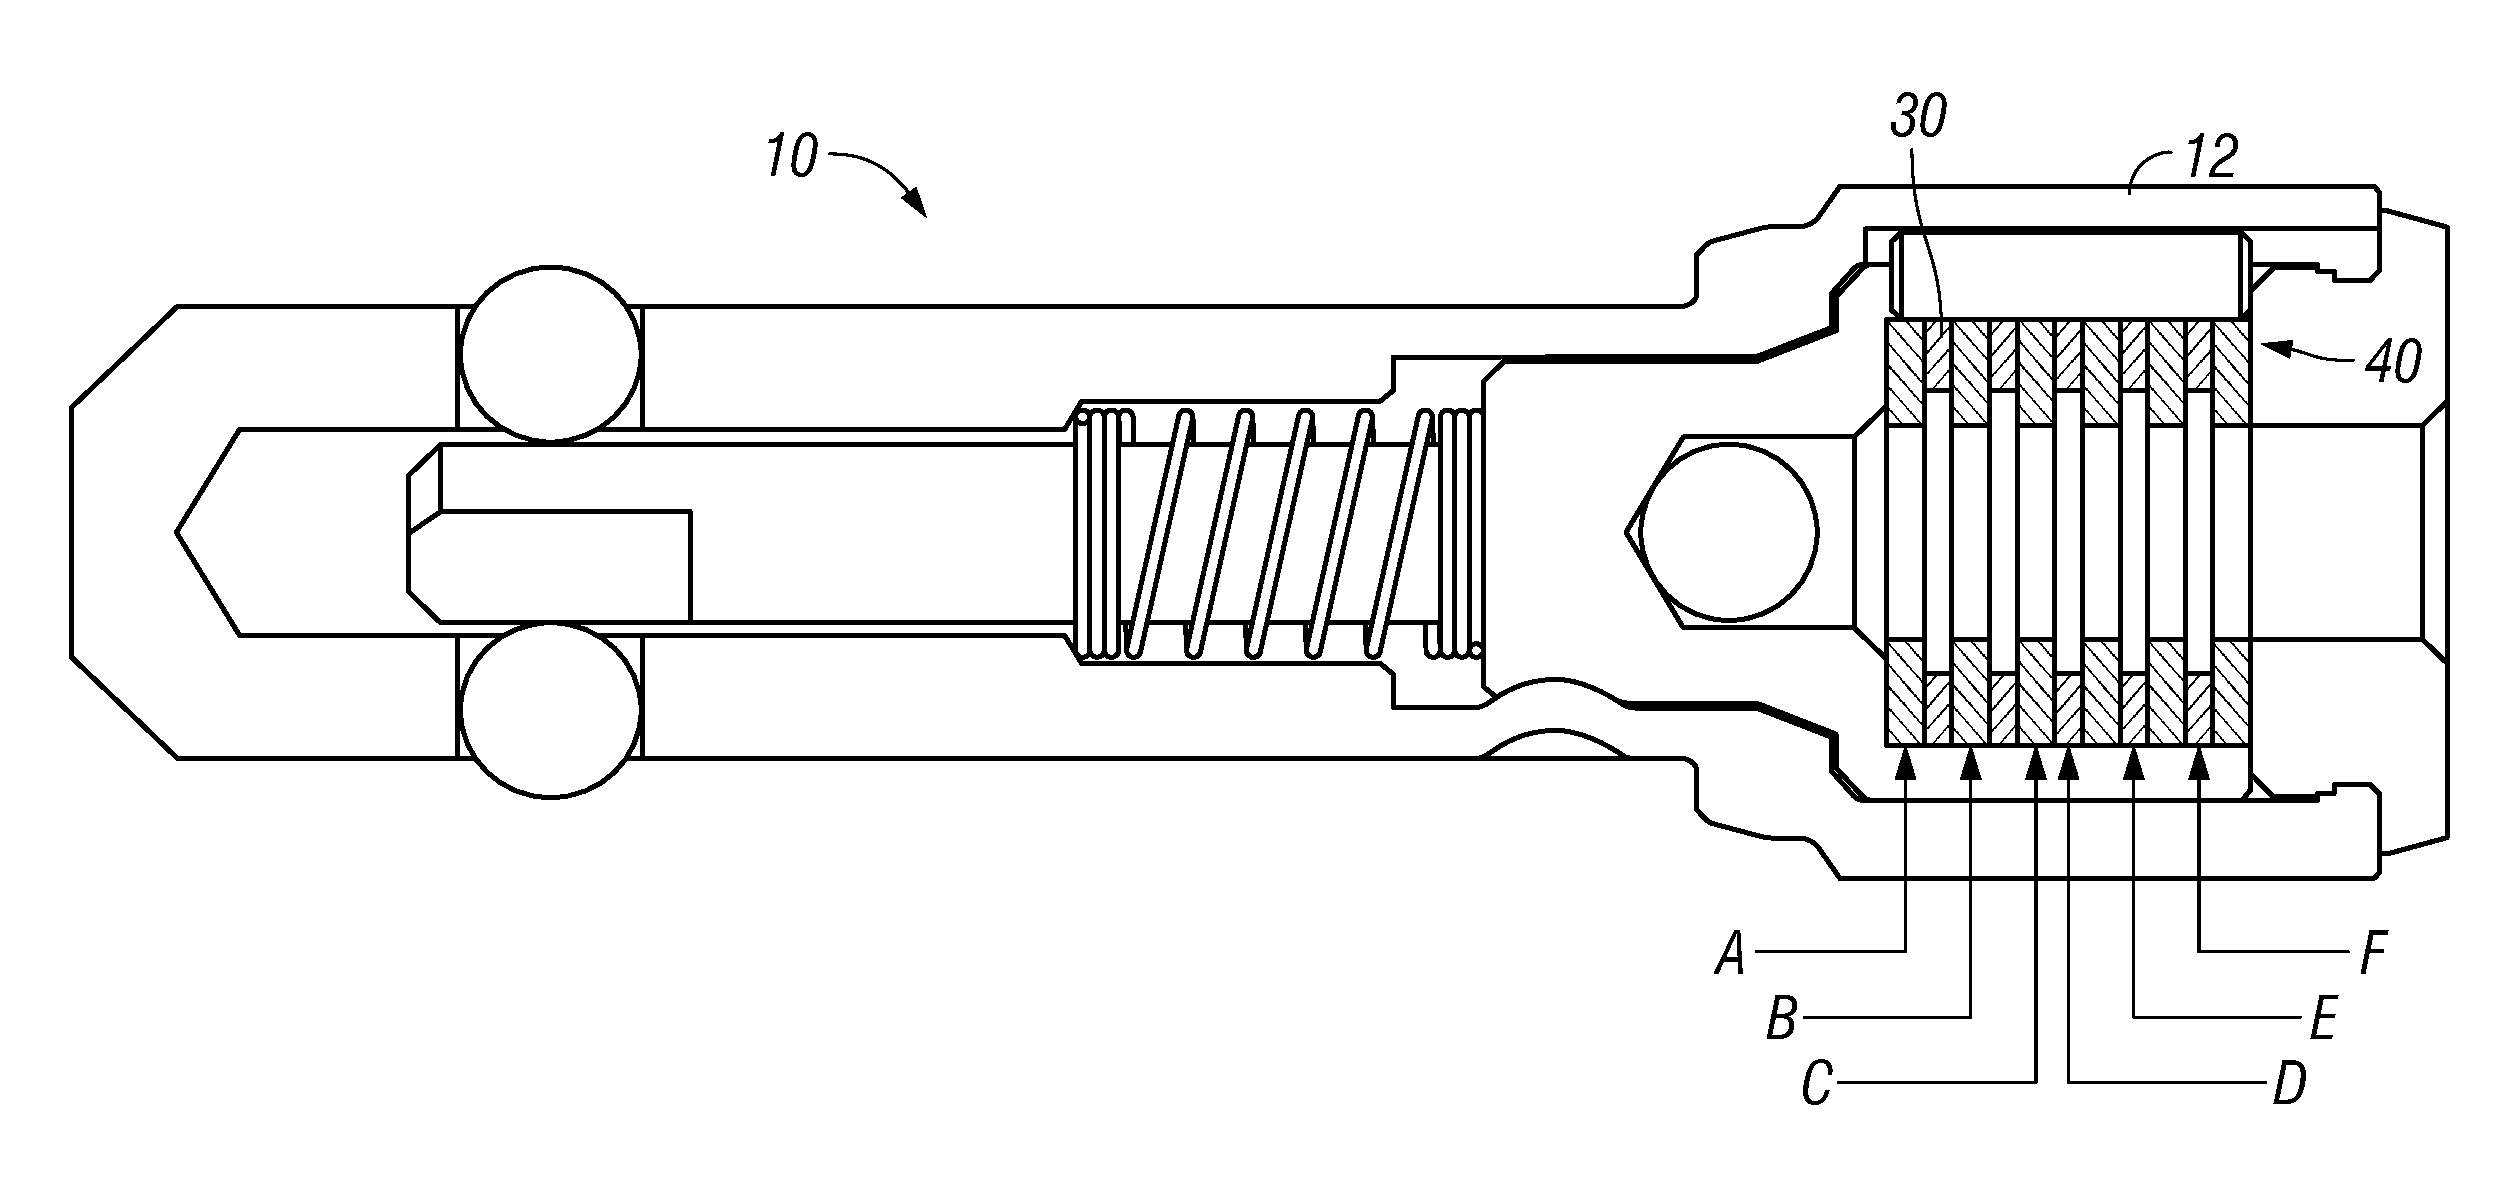 Rotating disk lock mechanism